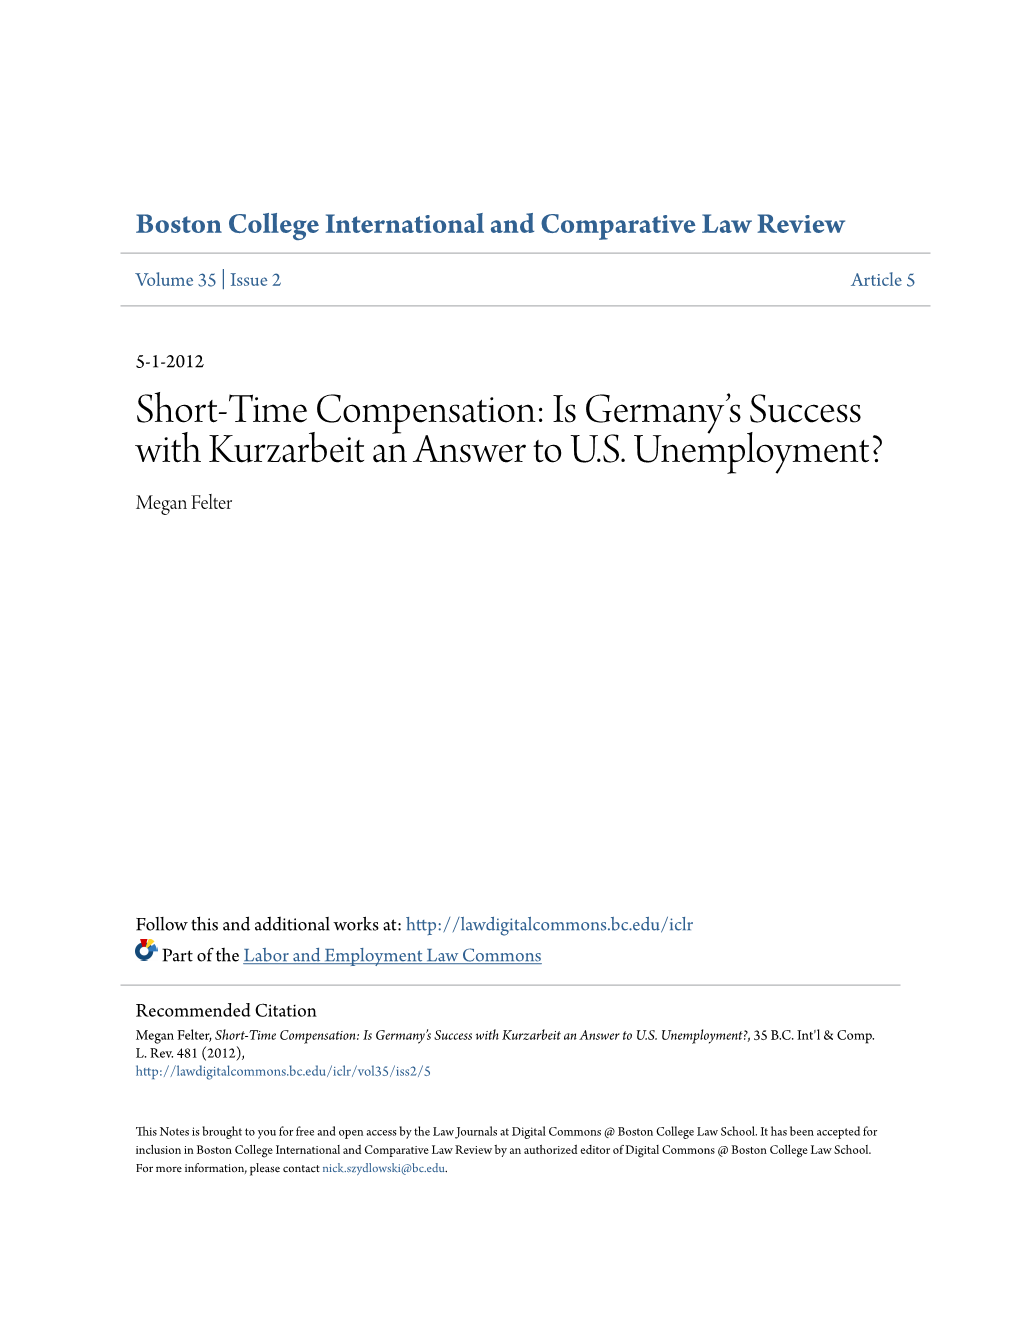 Short-Time Compensation: Is Germanyâ•Žs Success With